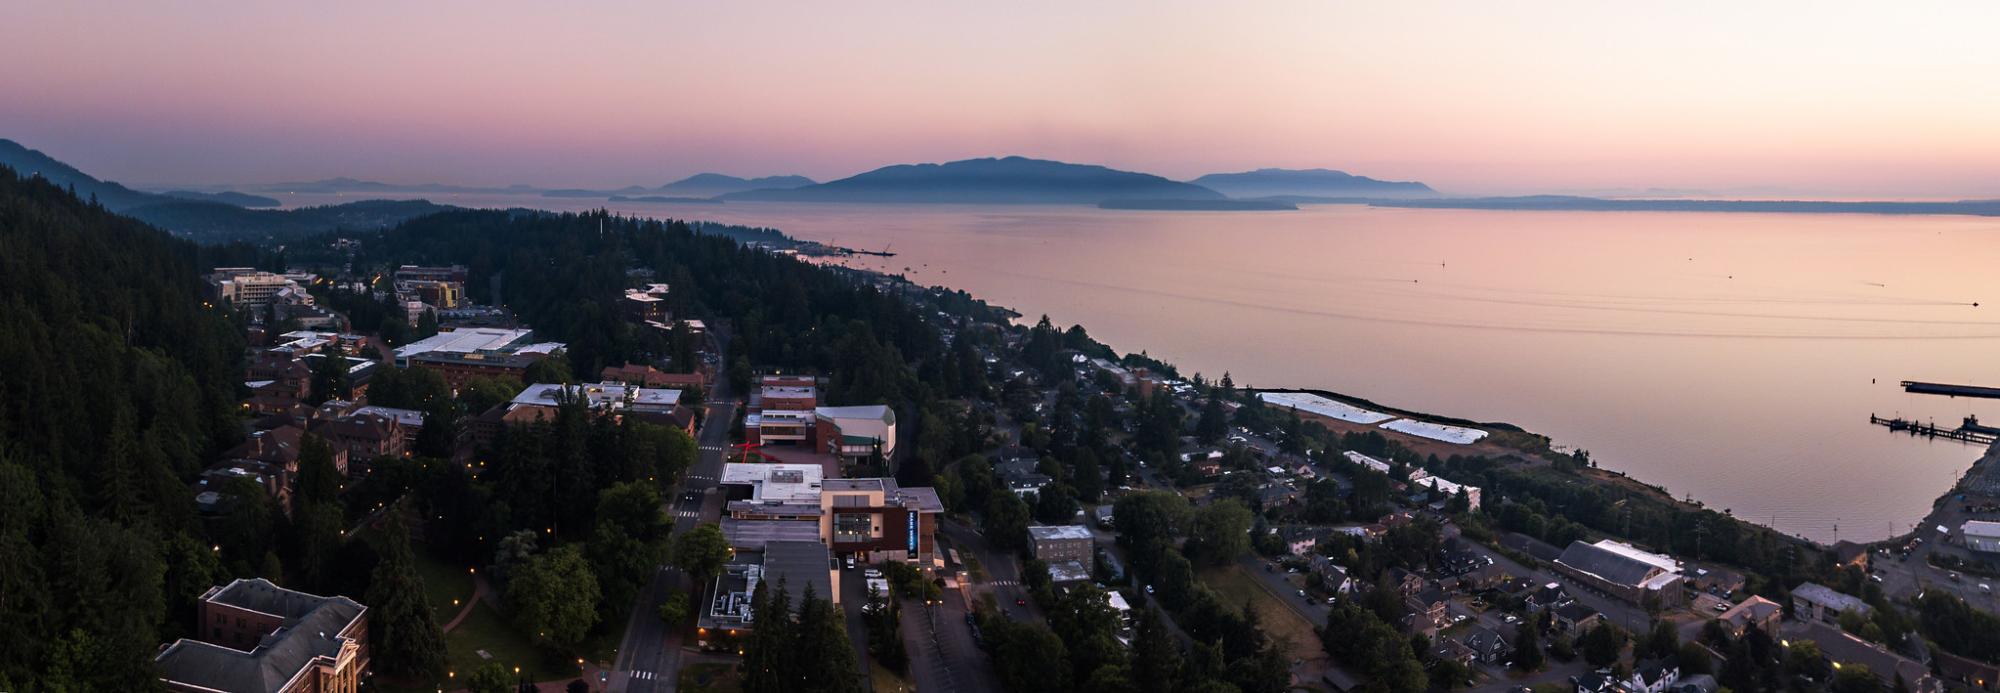 Panorama of Western Washington Univiersity and Bellingham Bay at sunset